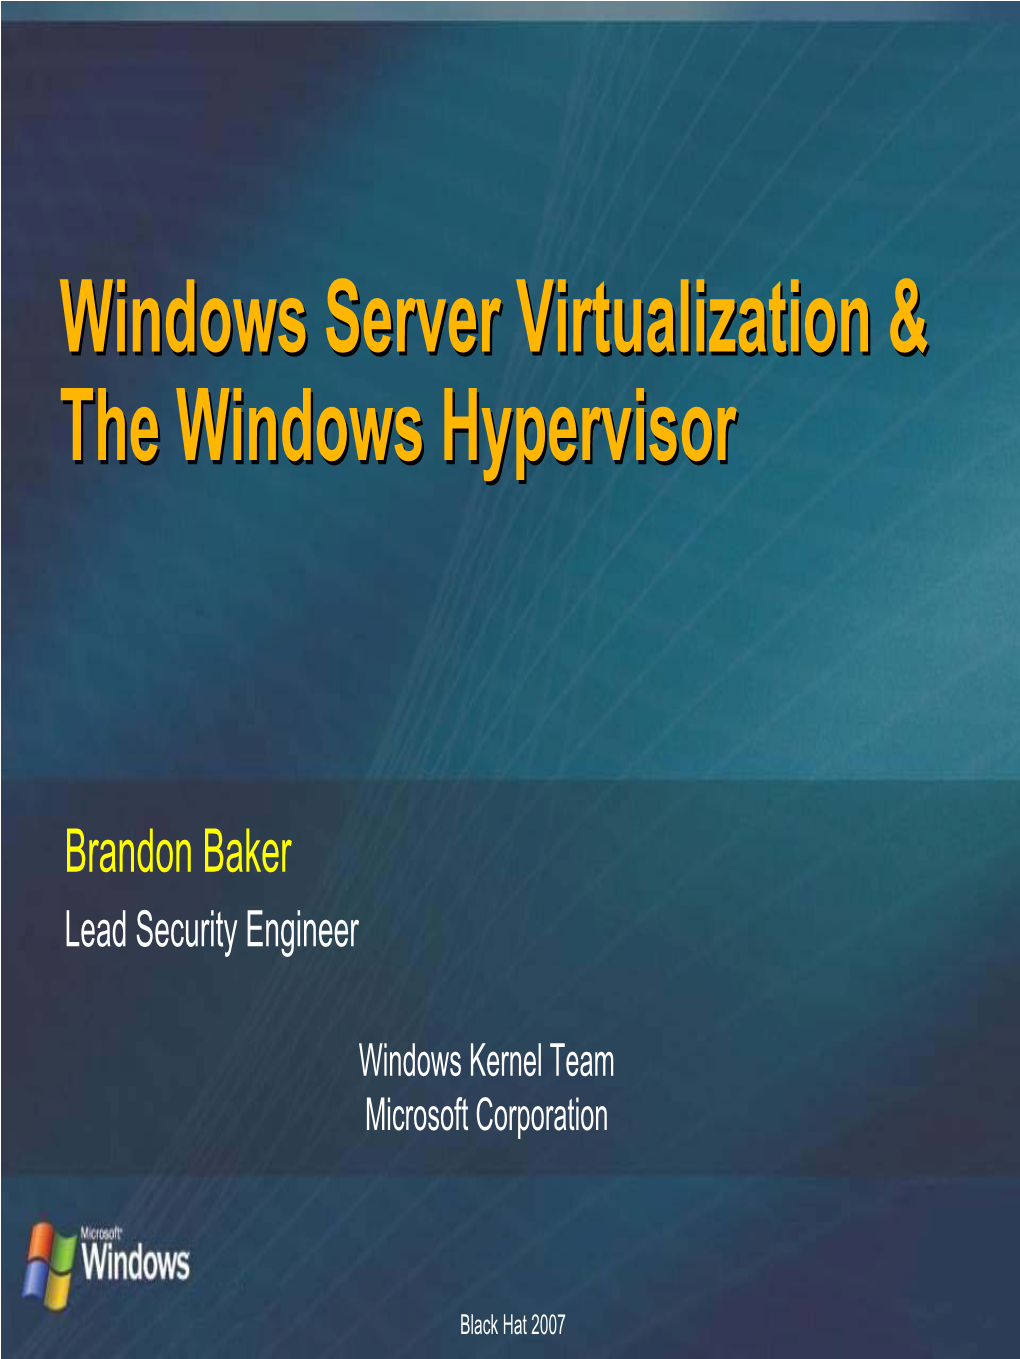 Windows Server Virtualization & the Windows Hypervisor